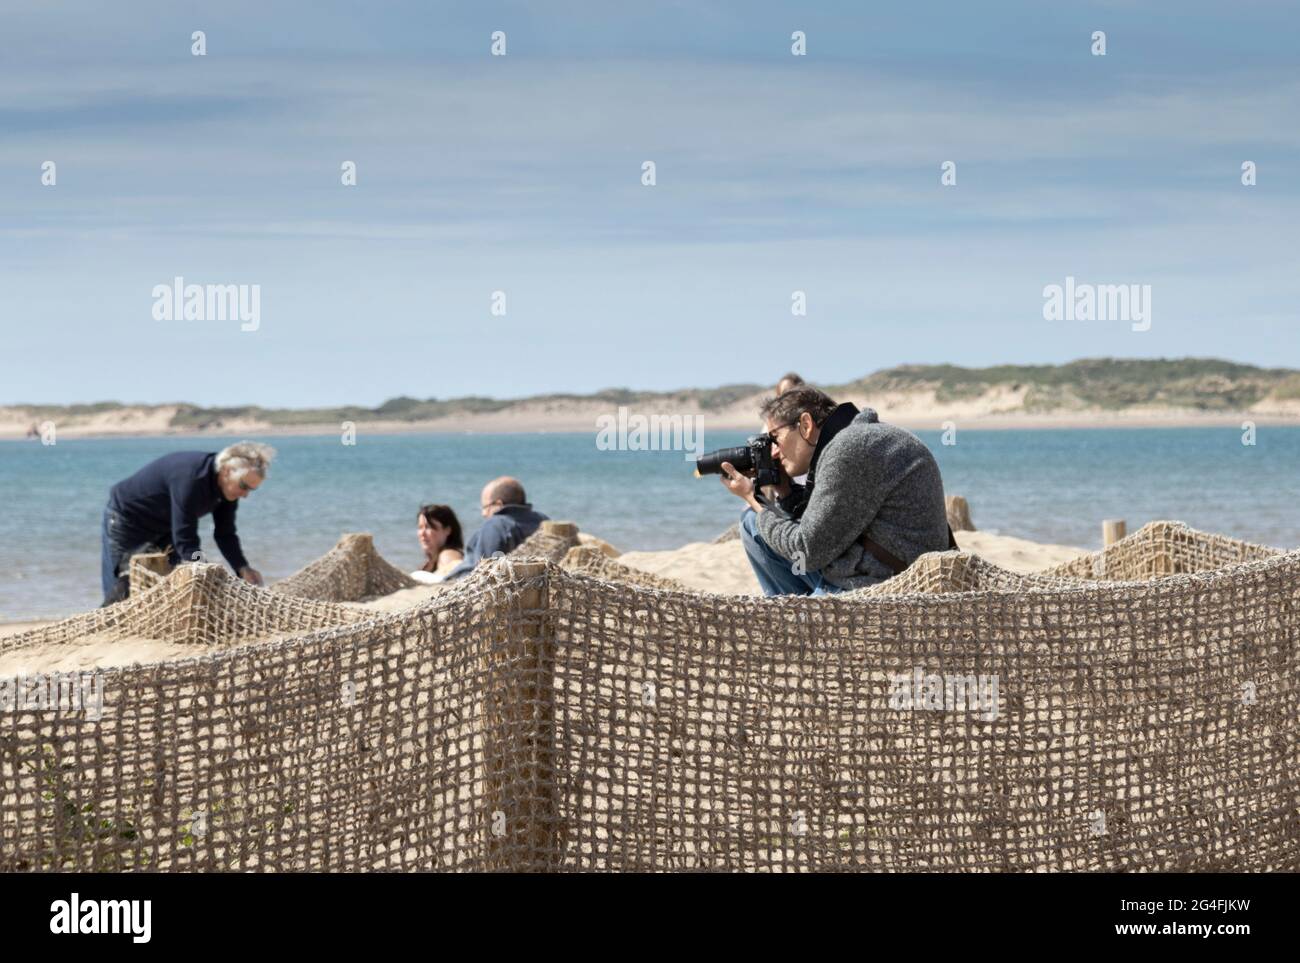 A keen photographer taking photographs on a beach Stock Photo